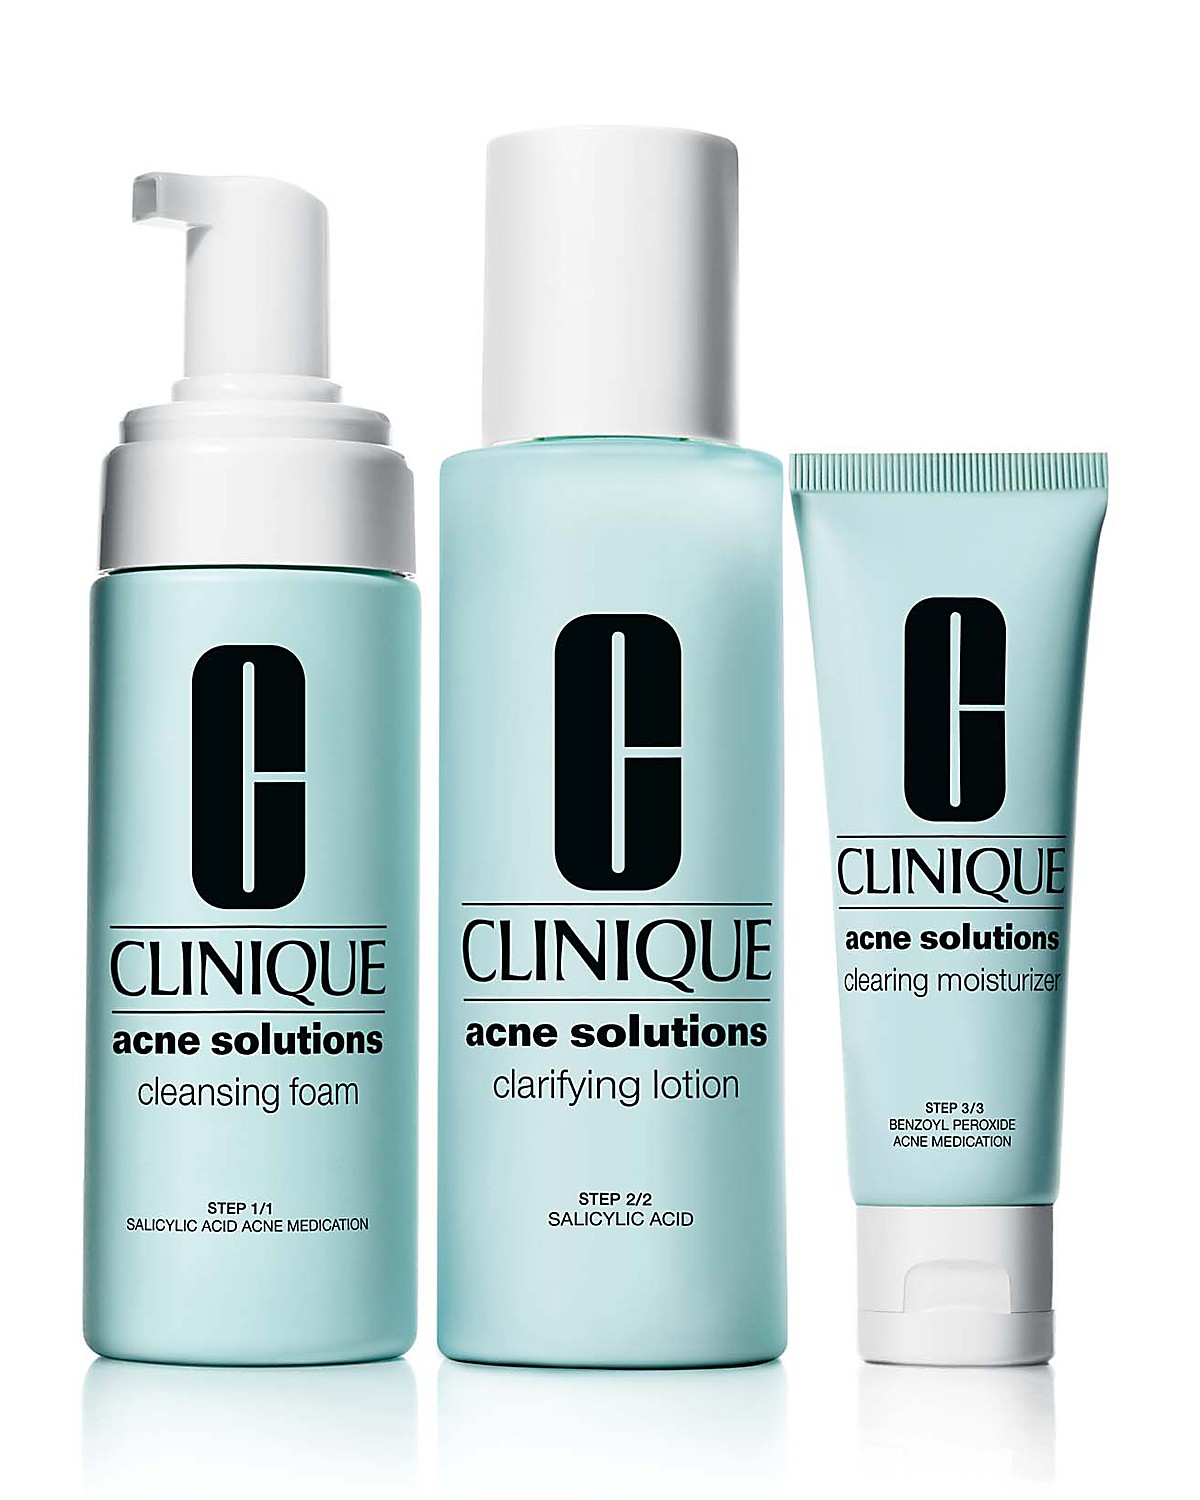 Clinique acne solutions review.